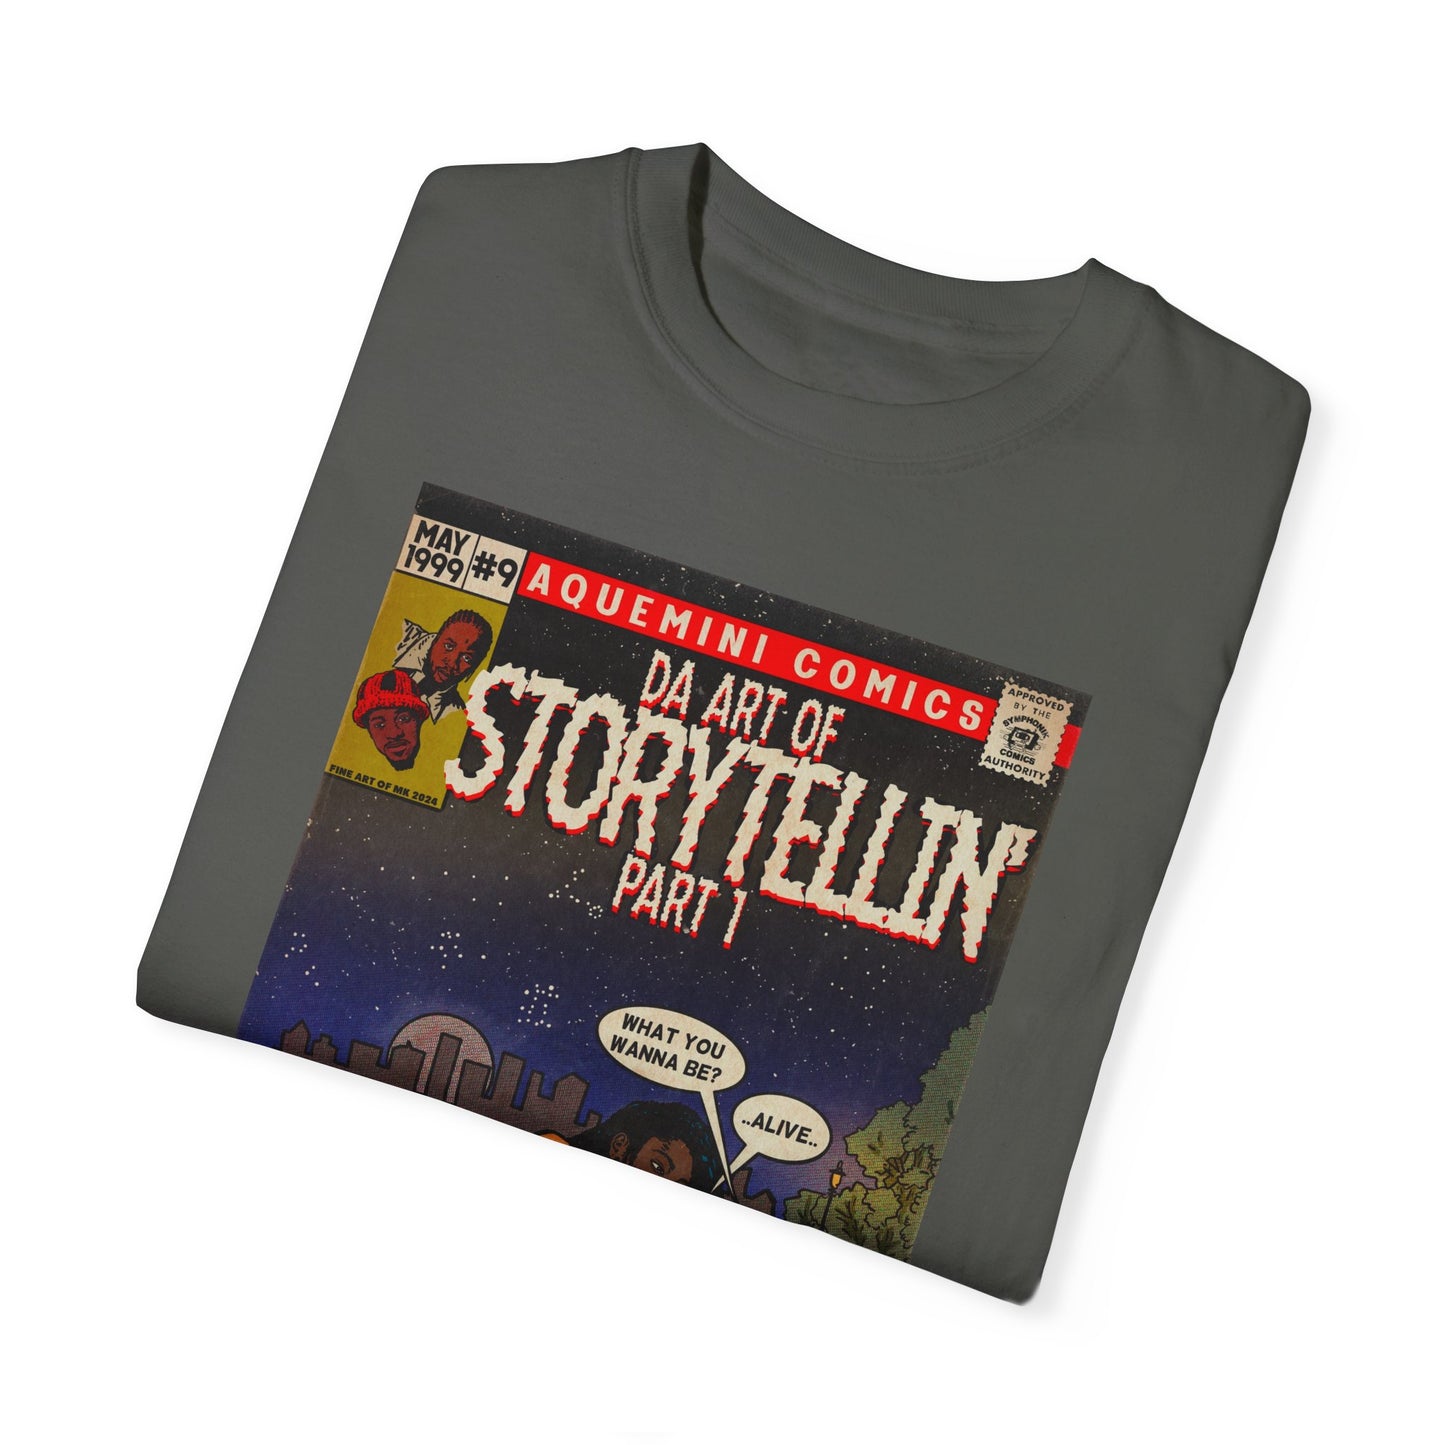 OutKast Da Art of Storytellin’ Part 1 - Unisex Comfort Colors T-shirt